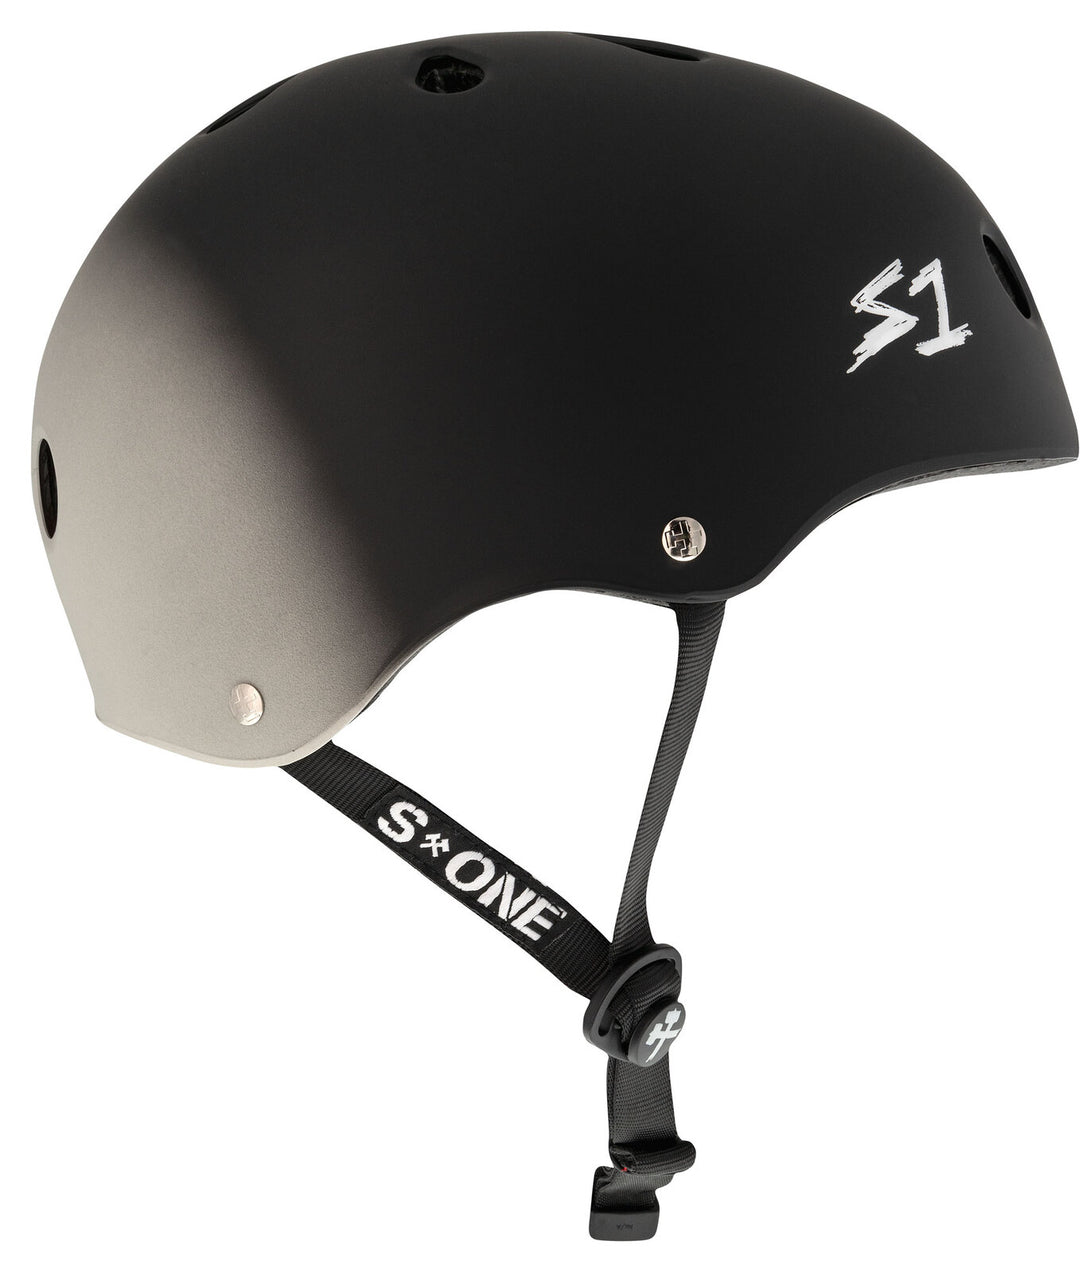 S-One Helmet Lifer Black/Grey Fade Boyd Hilder - freedommachine